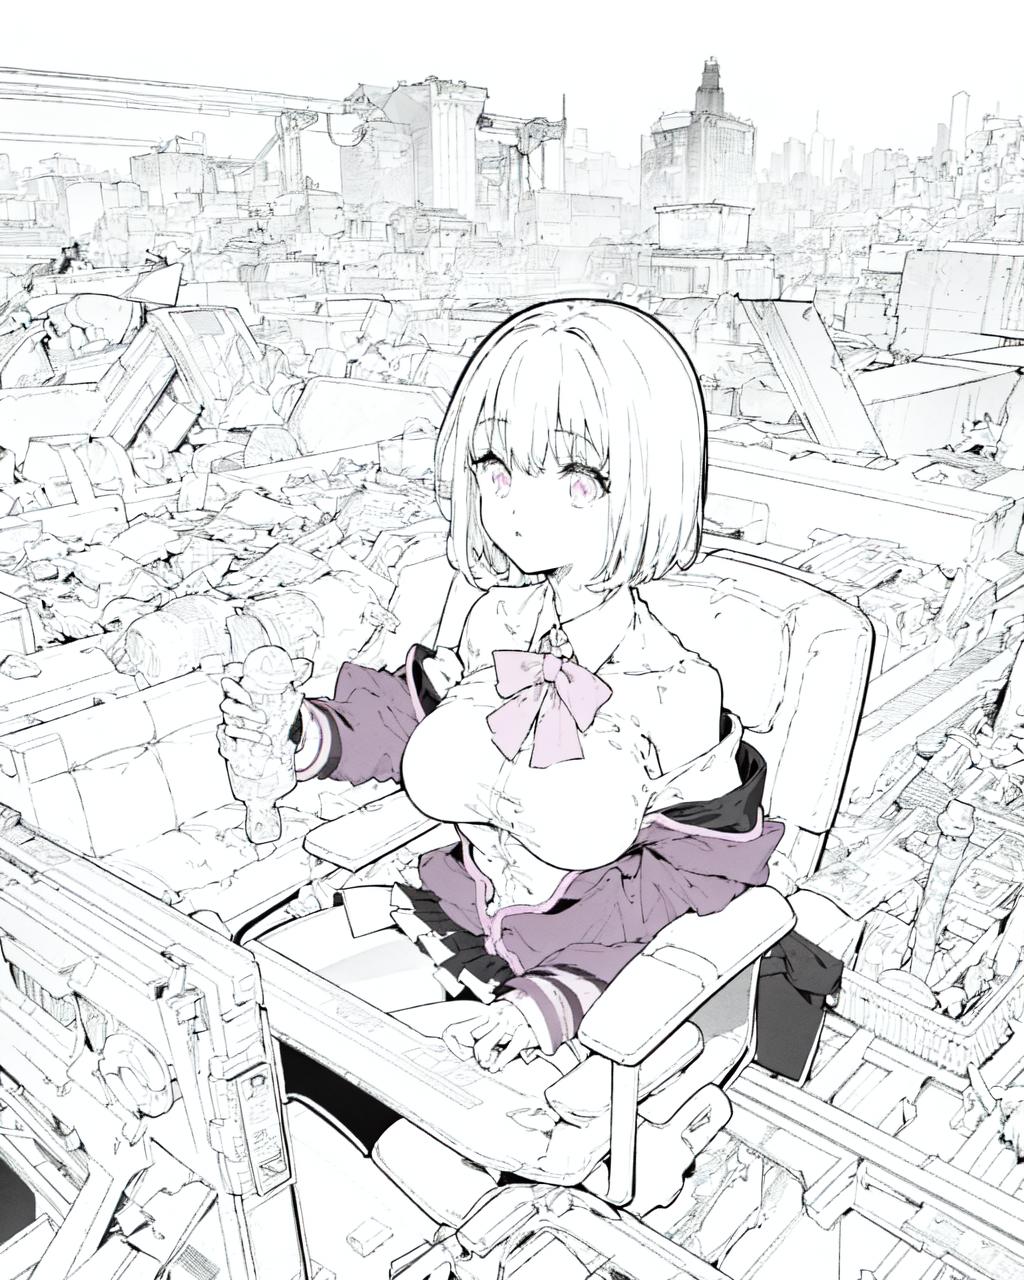 Anime Lineart / Manga-like (线稿/線画/マンガ風/漫画风) Style image by norinai